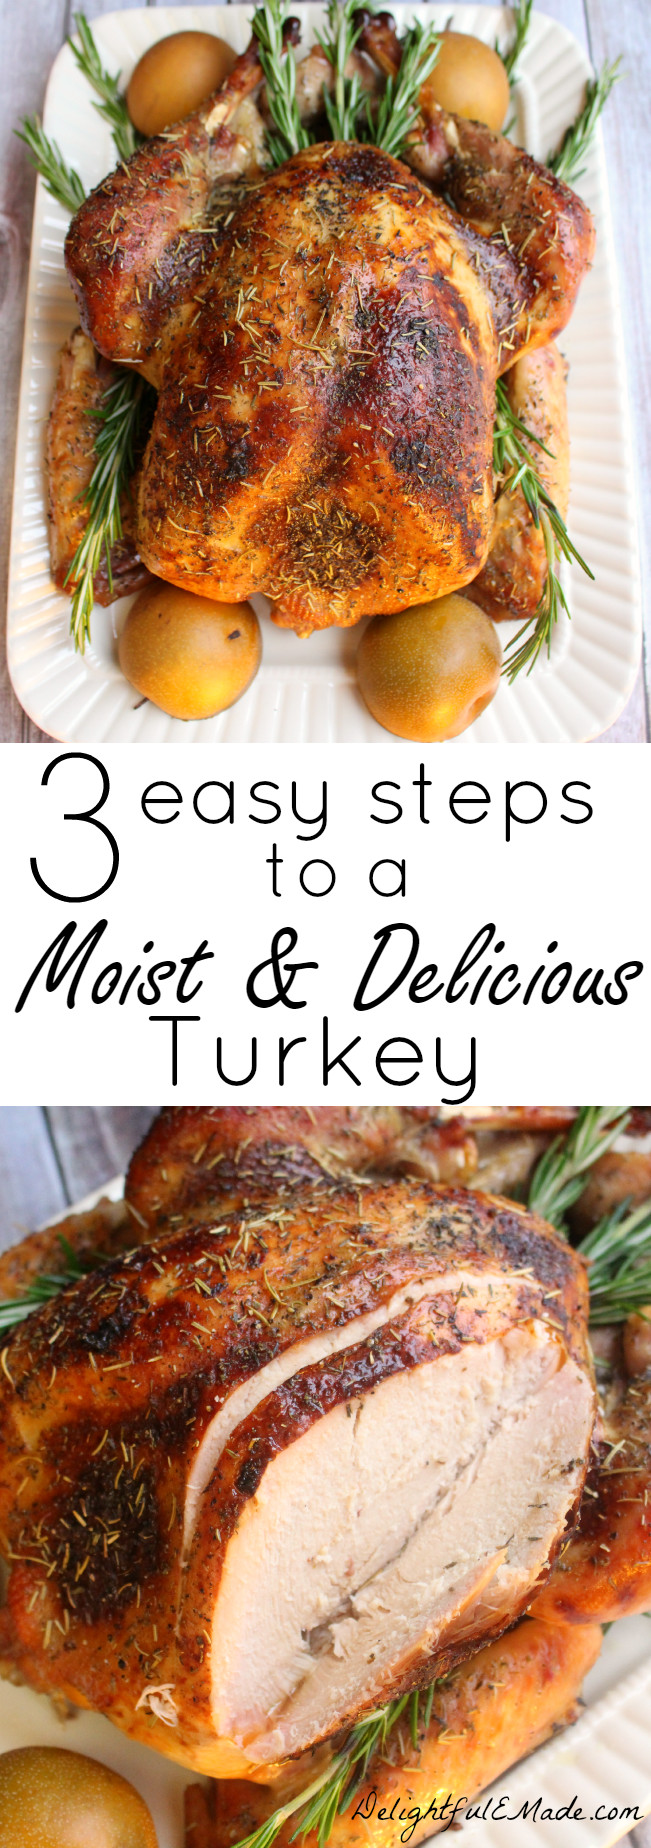 Moist Thanksgiving Turkey Recipe
 Tired of dry bland turkey I ll show you three easy steps